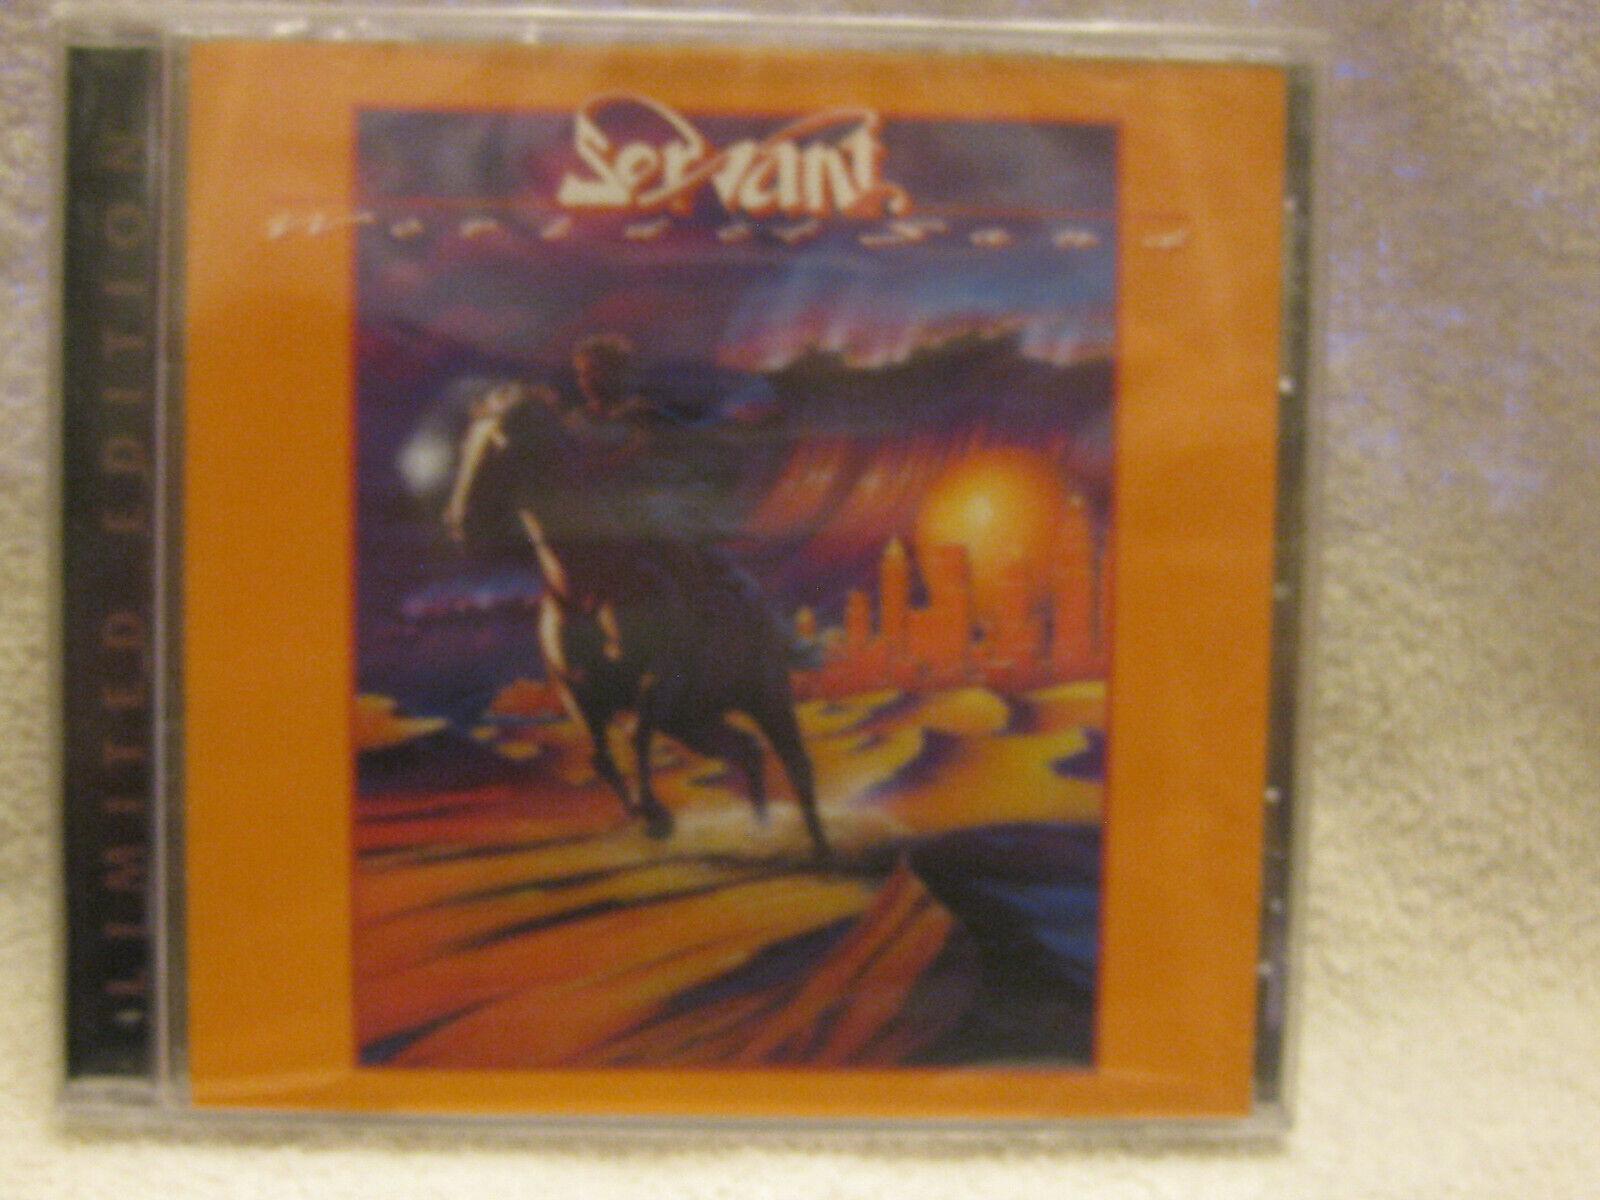 Servant ‎– World Of Sand (2006) Retroactive Records ‎– RAR7826 CD NEW rare 